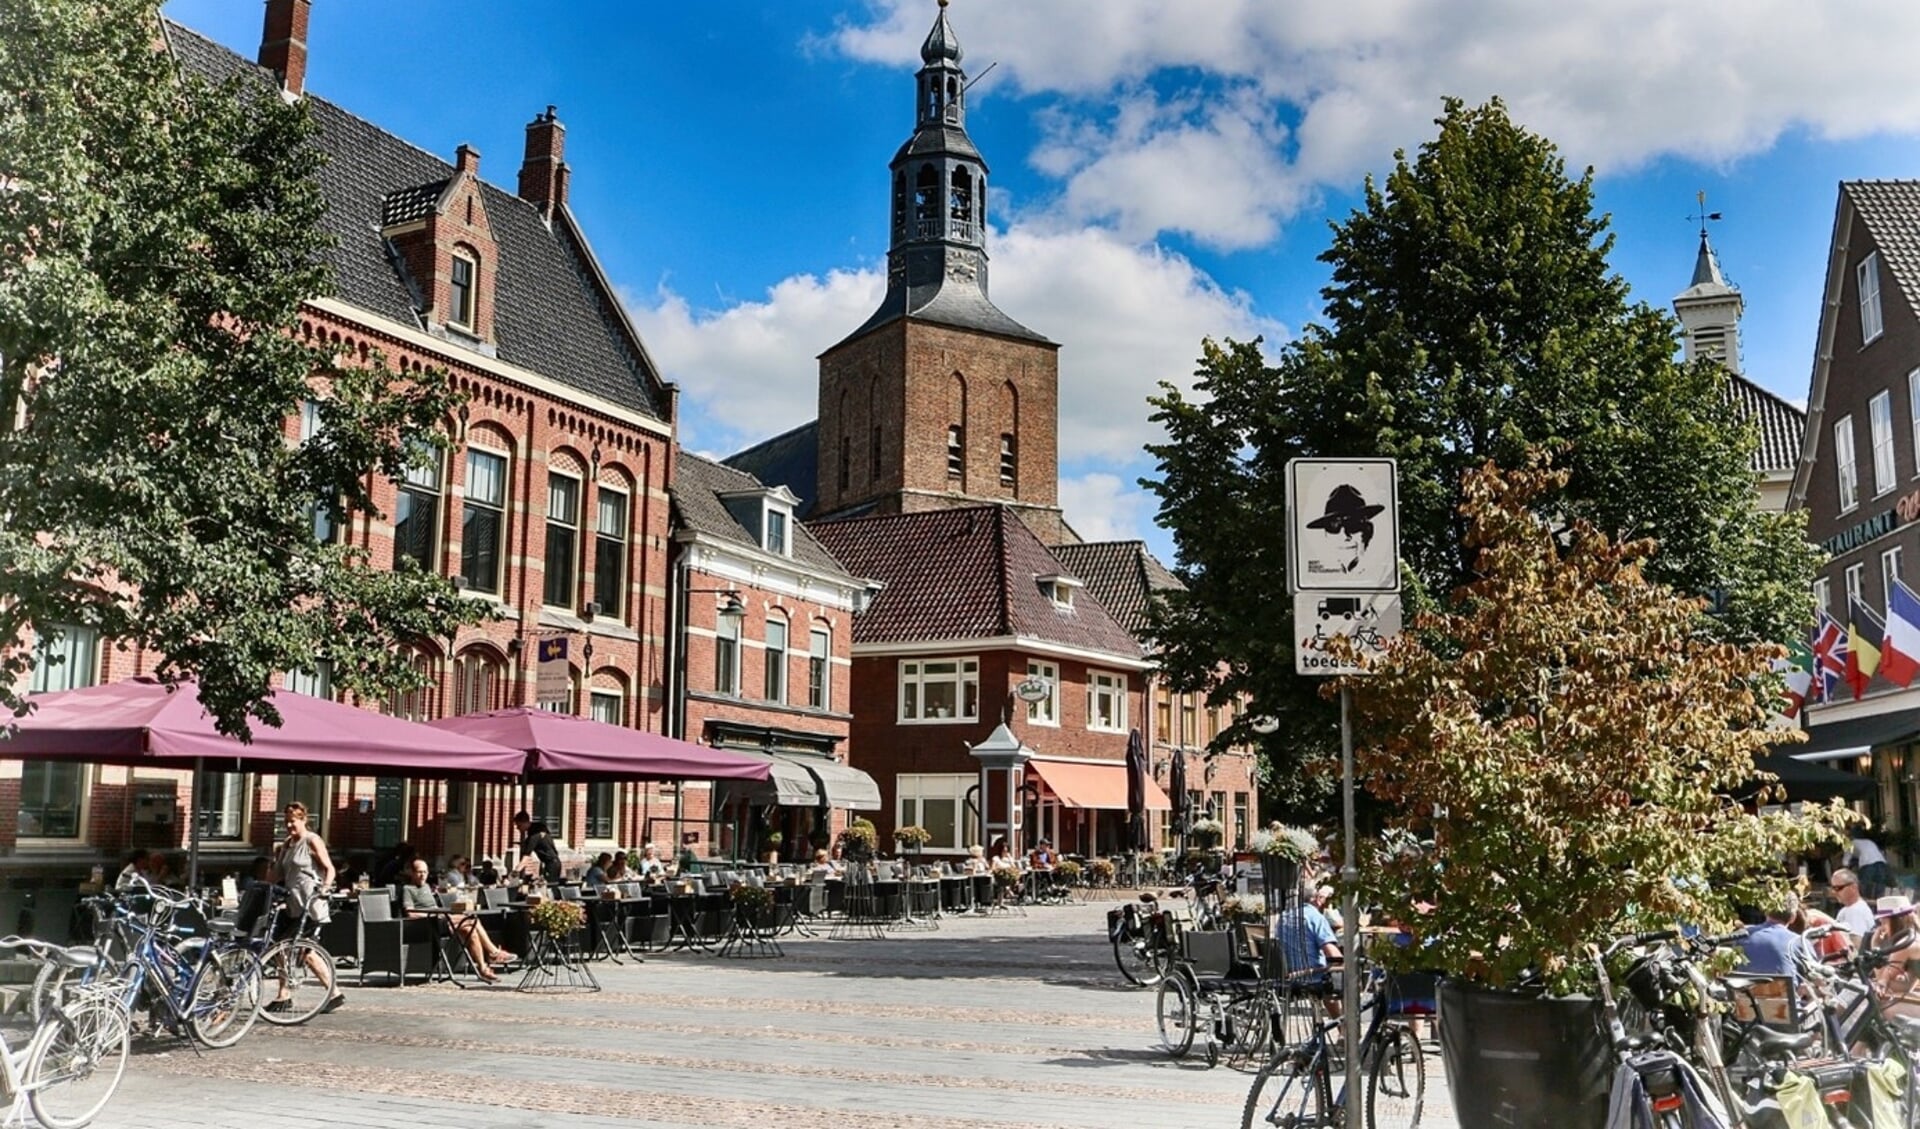 https://pixabay.com/photos/bertbosch-street-scenes-2249316/